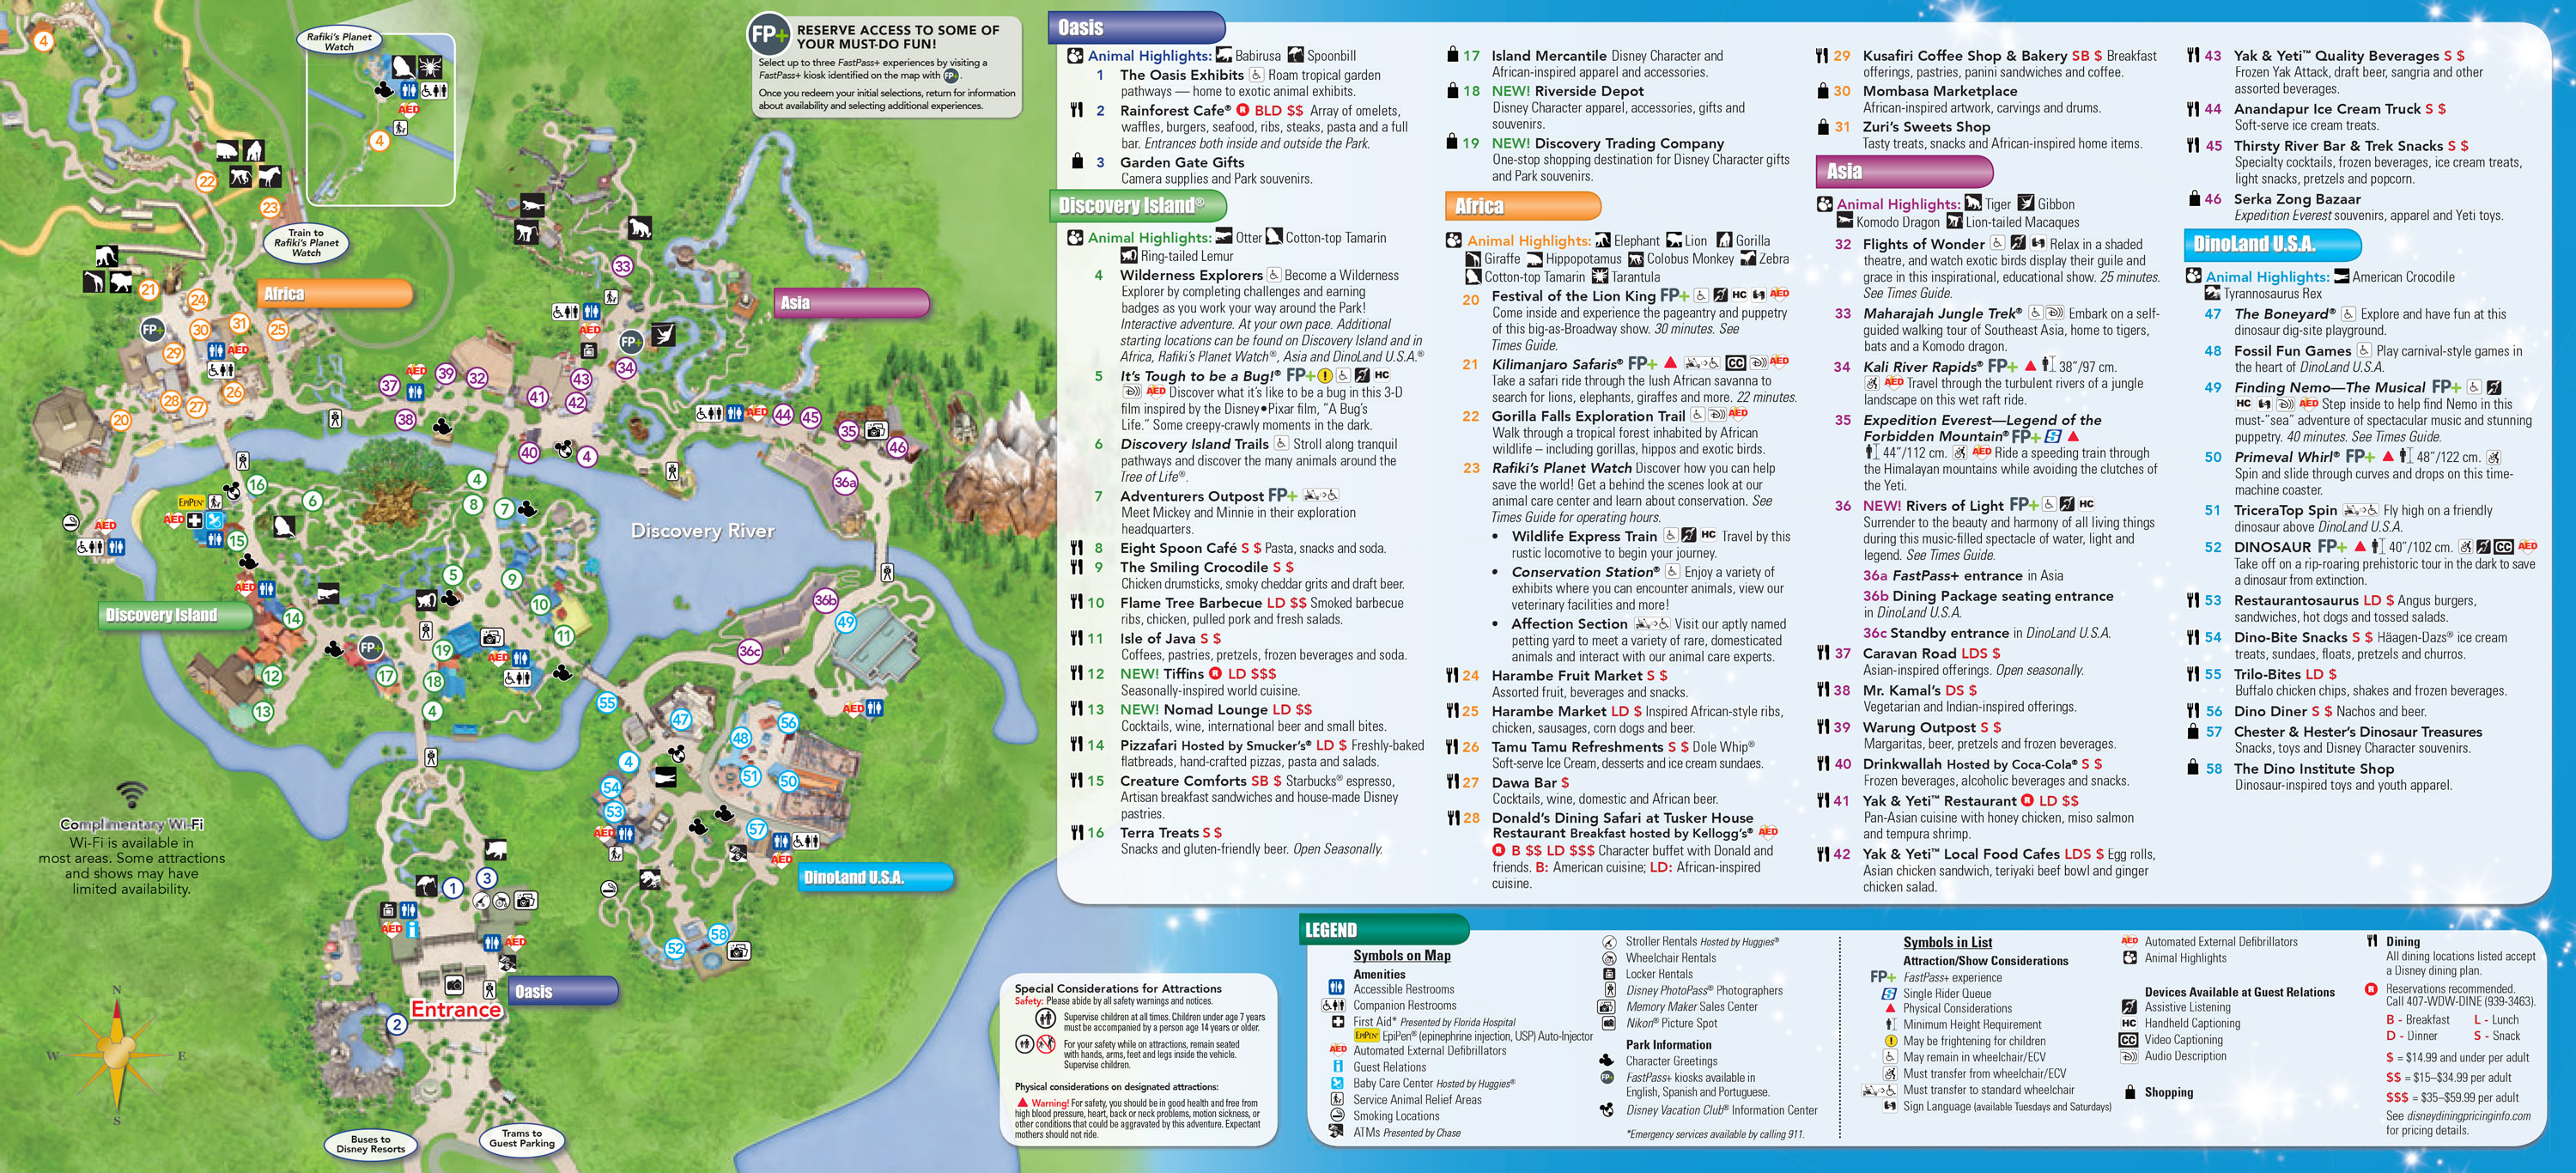 Plan Walt Disney World animal Kingdom